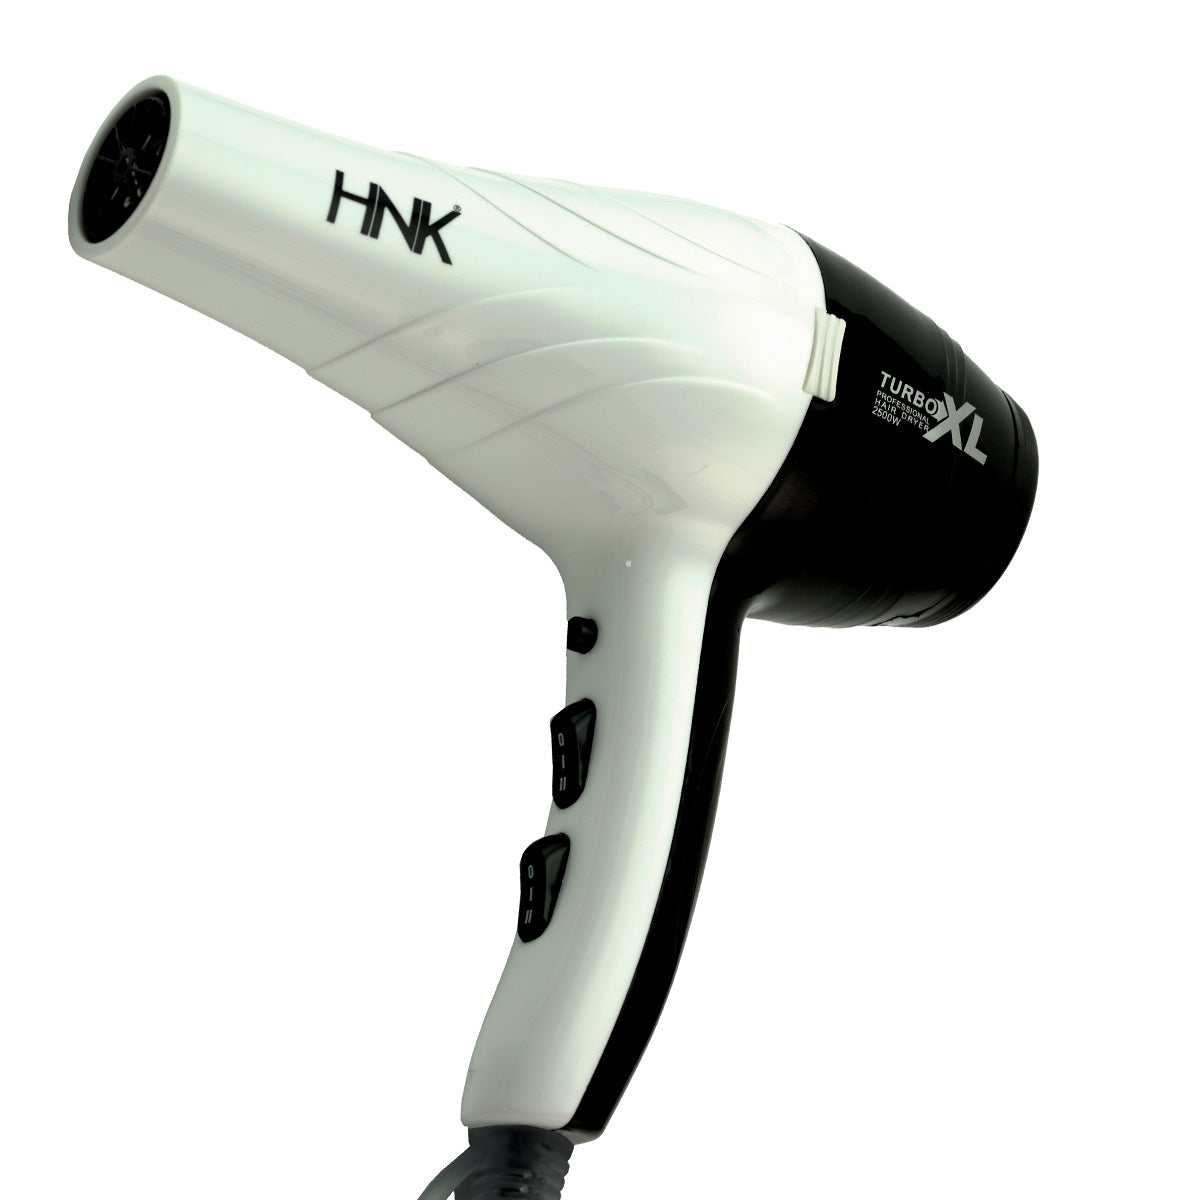 Turbo XL Professional Hairdryer